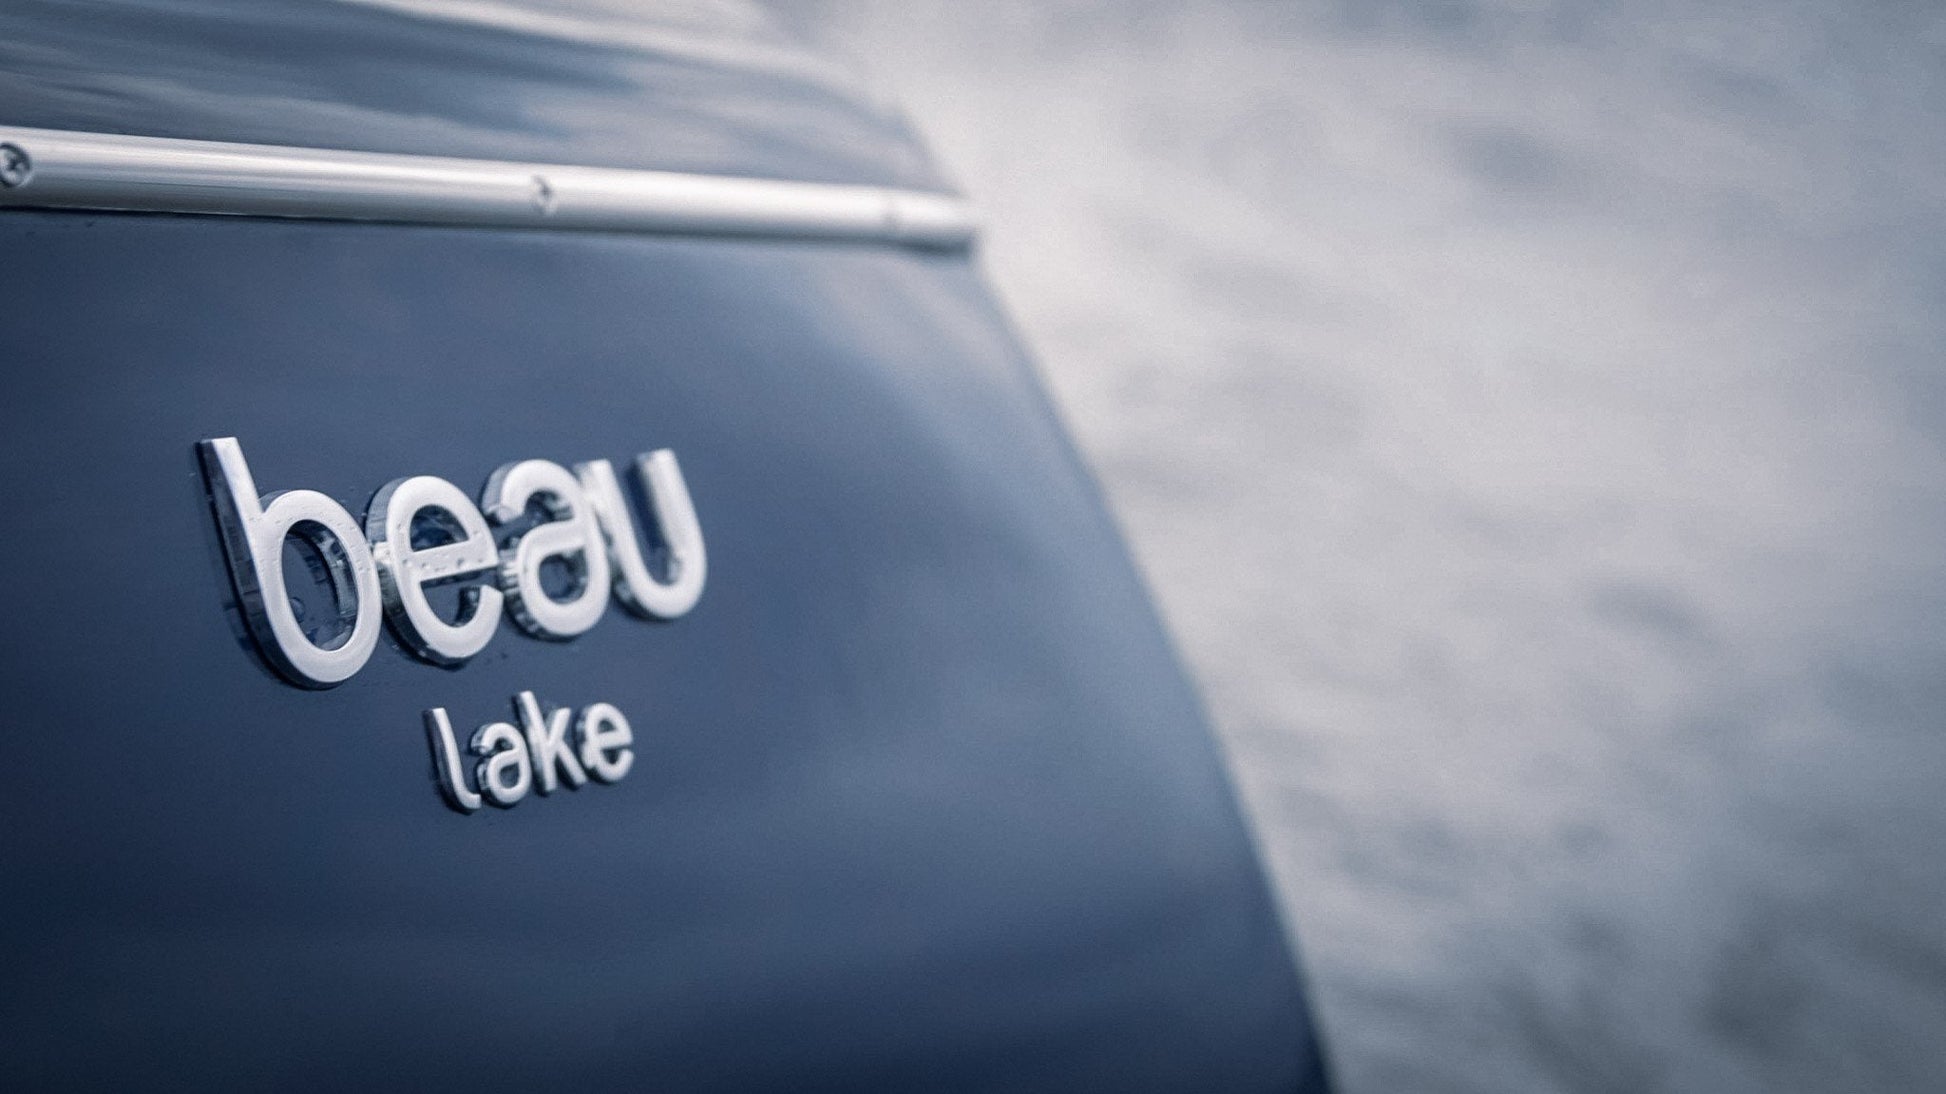 Beau Lake Electric Runabout - TheArsenale